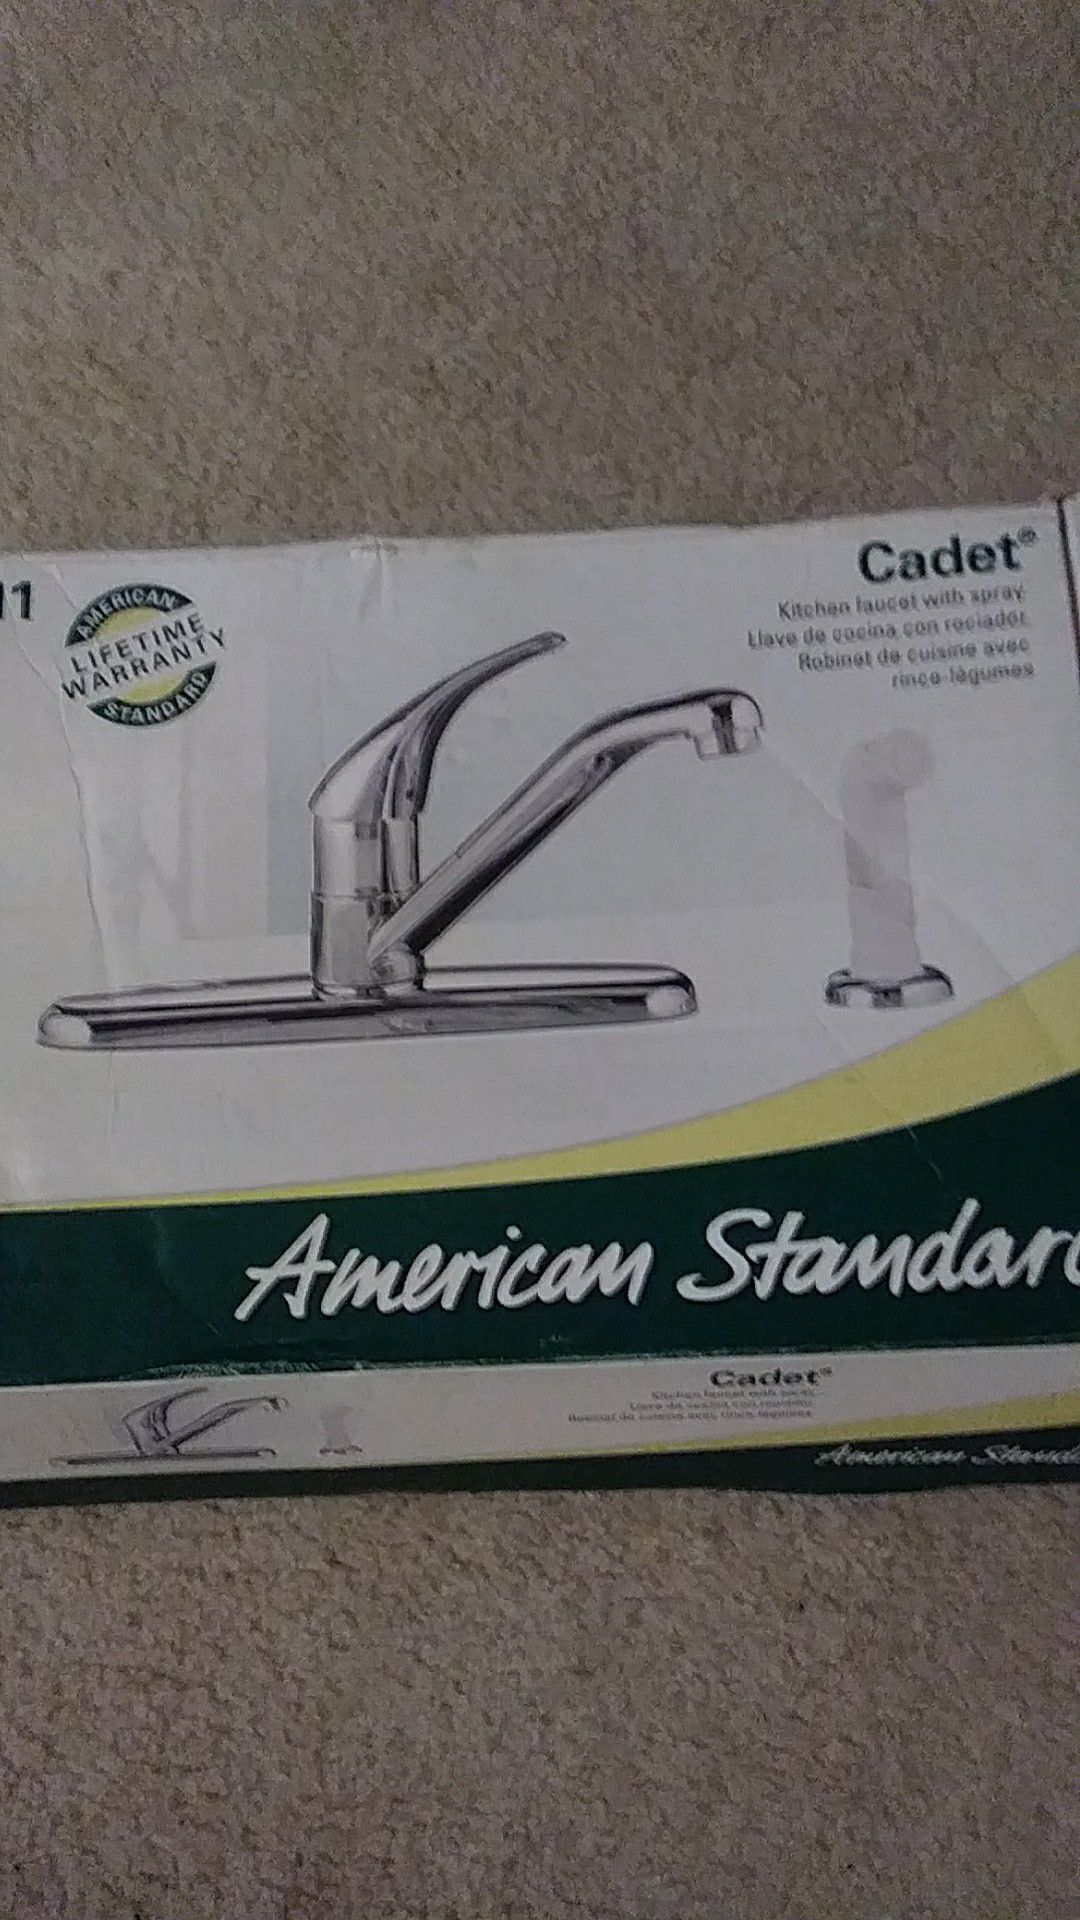 American Standard Cadet Kitchen Faucet w/Spray